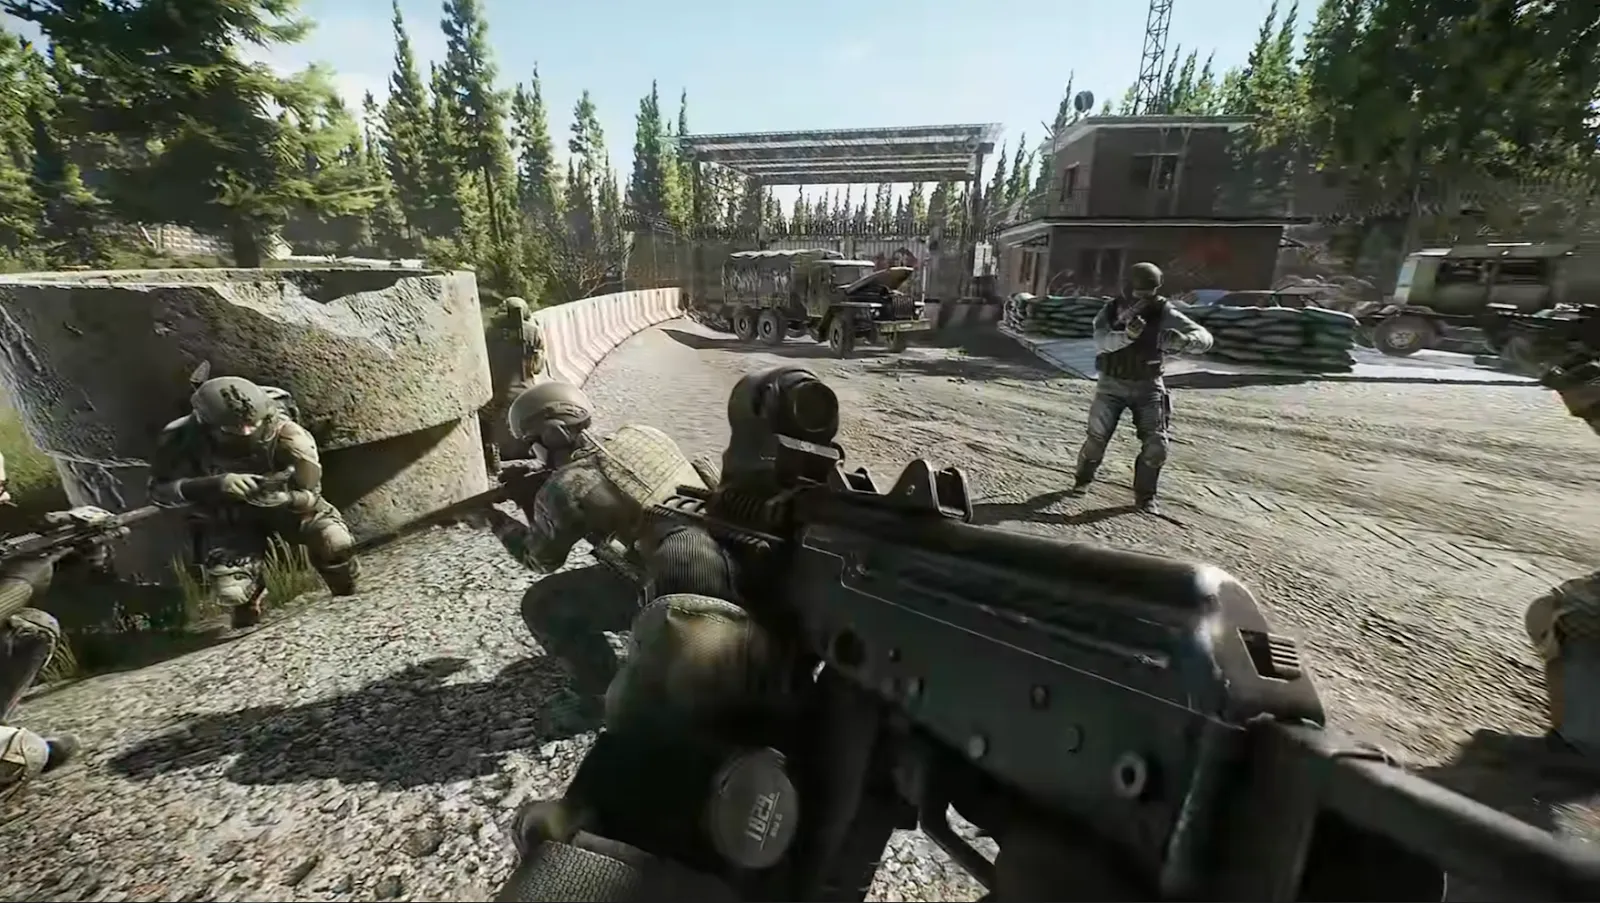 Escape from tarkov gameplay trailer screenshot